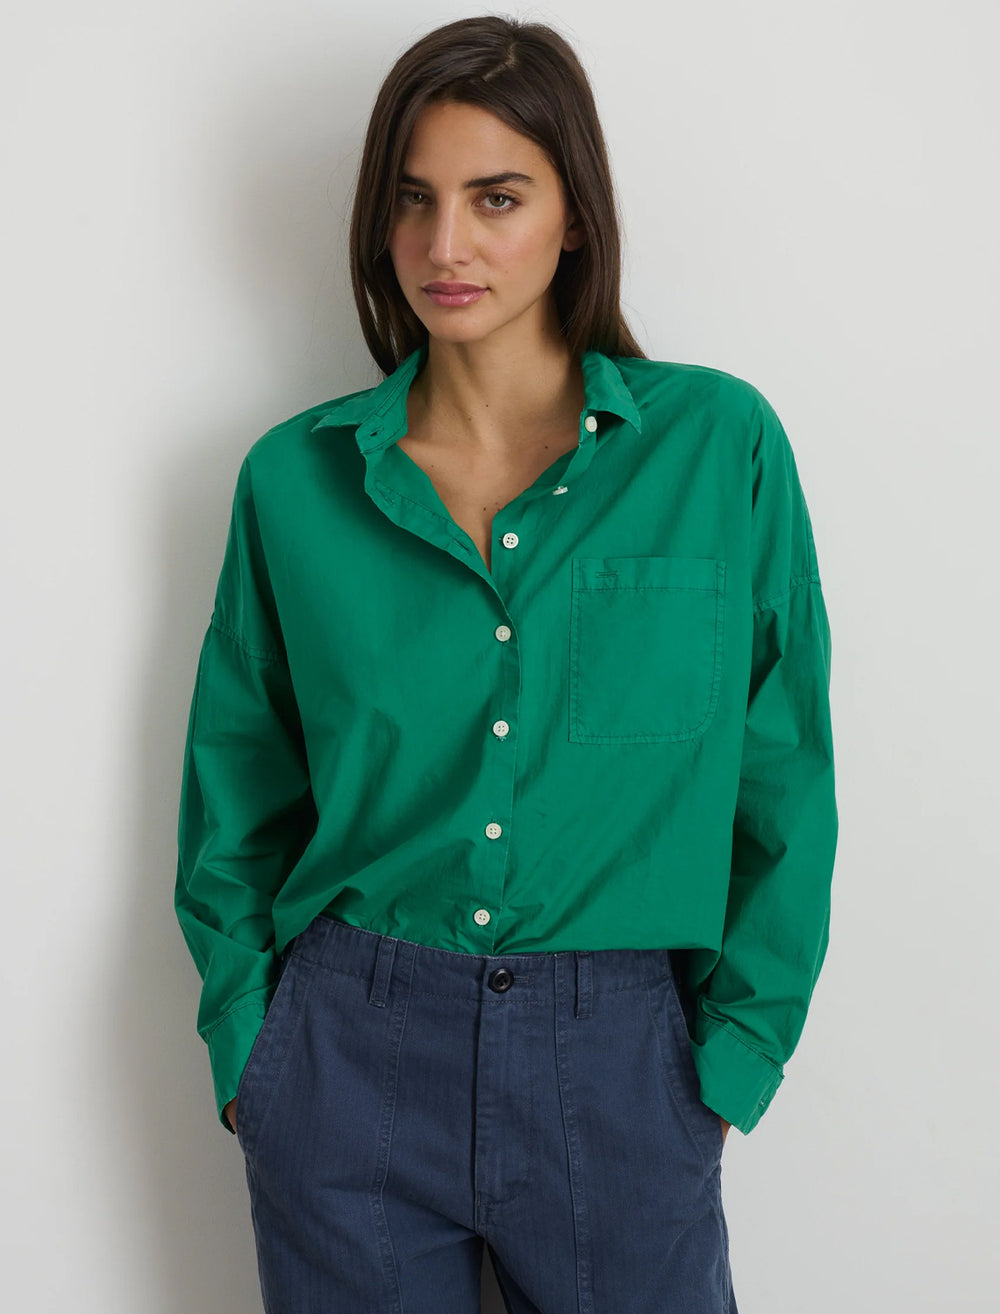 Model wearing Alex Mill's standard shirt in spring green.